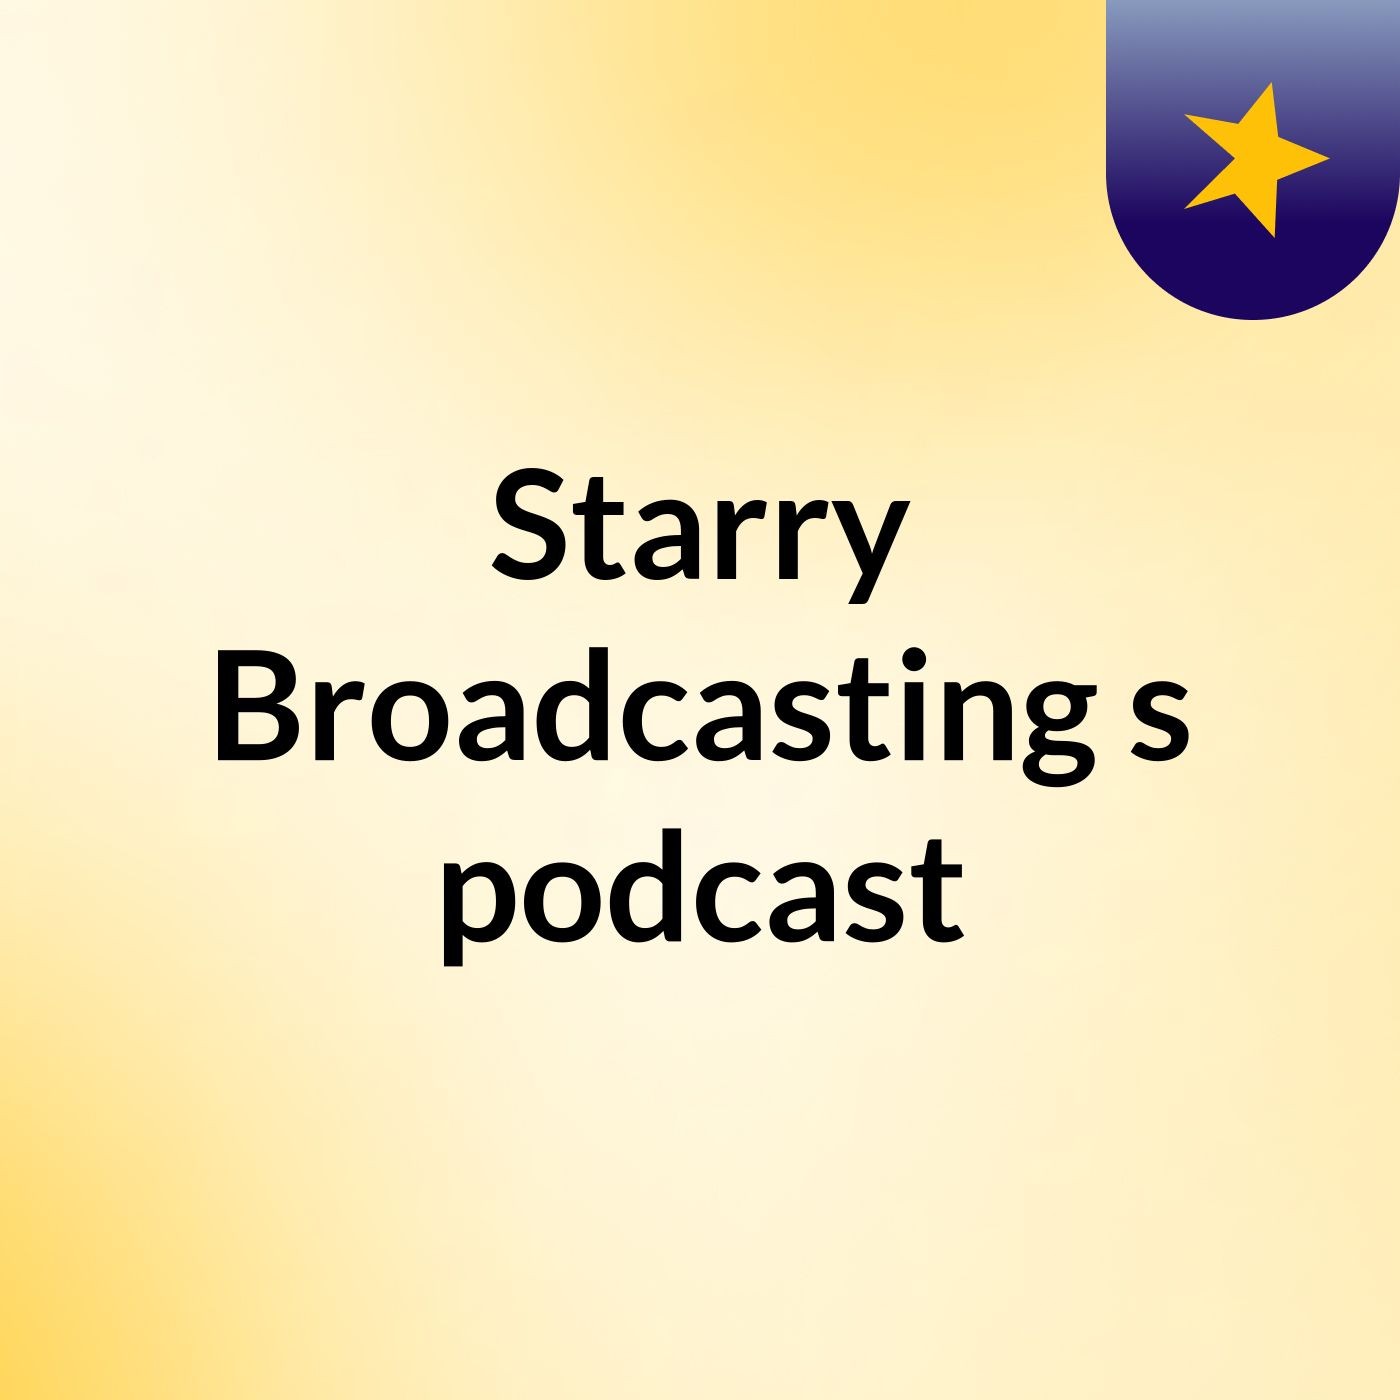 Starry Broadcasting's podcast